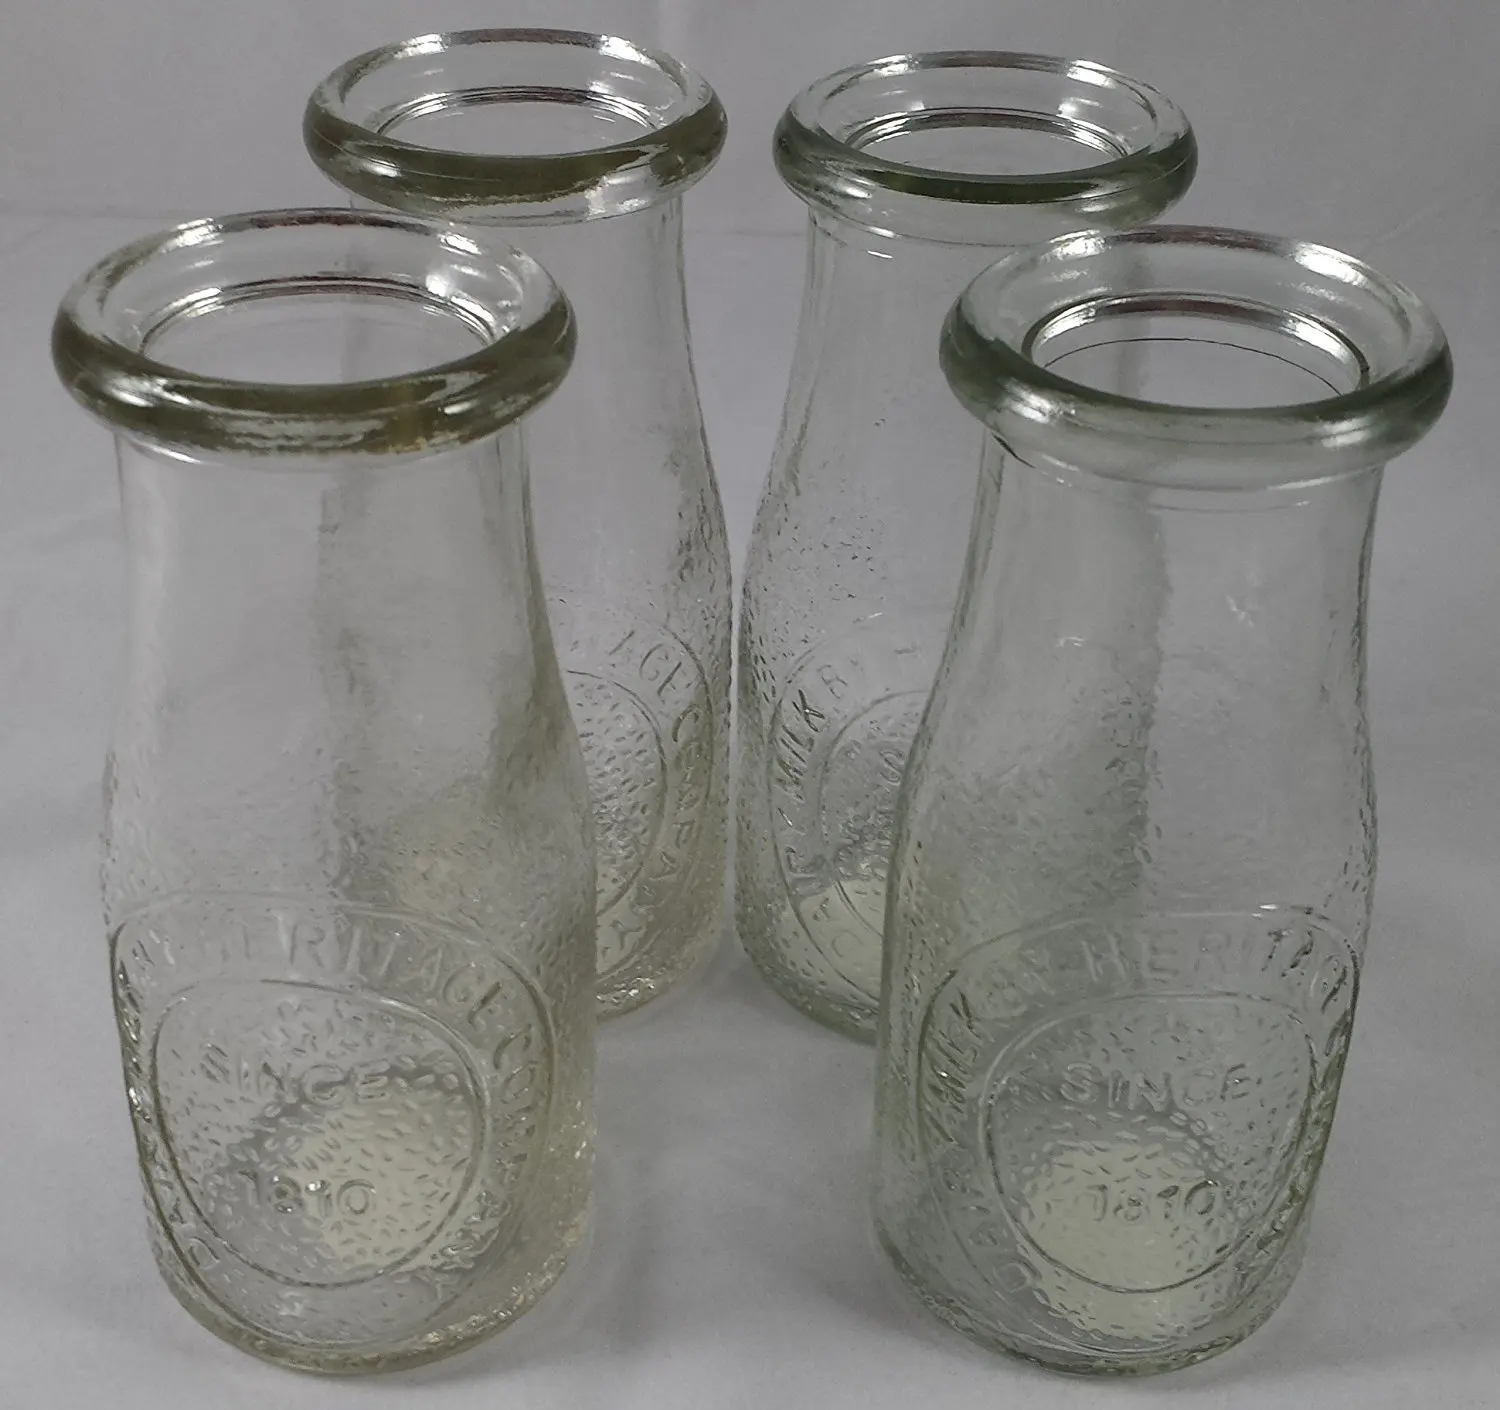 Dairy Milk Glass By Heritage Company Since 1810 7.5 Oz (Set of 4) by Herita...